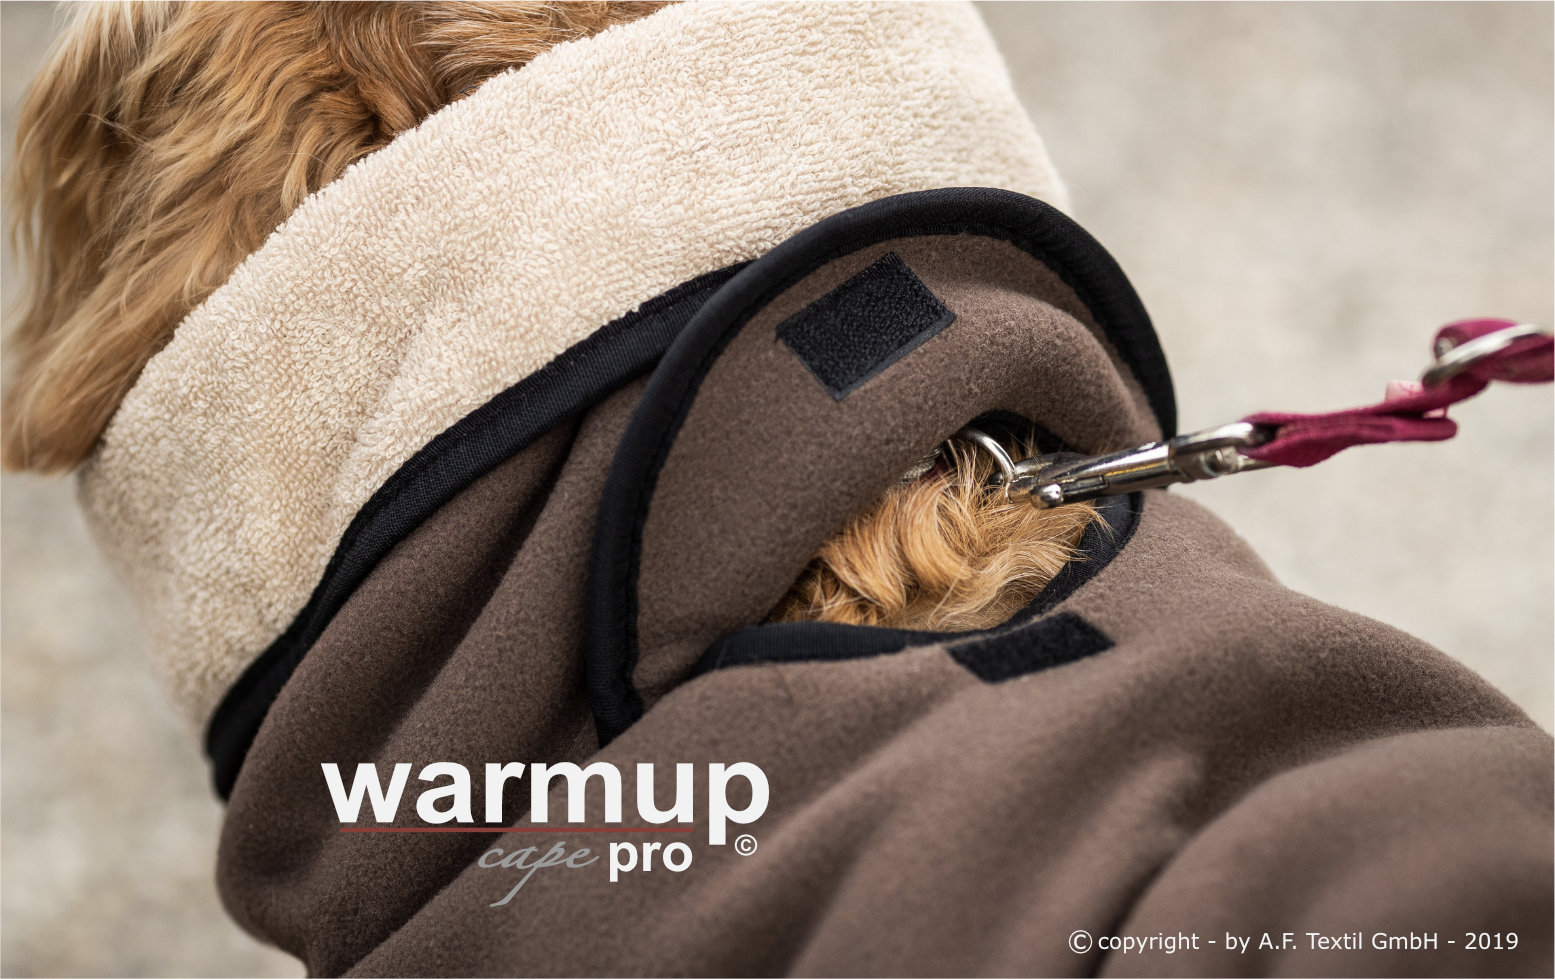 Warmup cape pro mocca